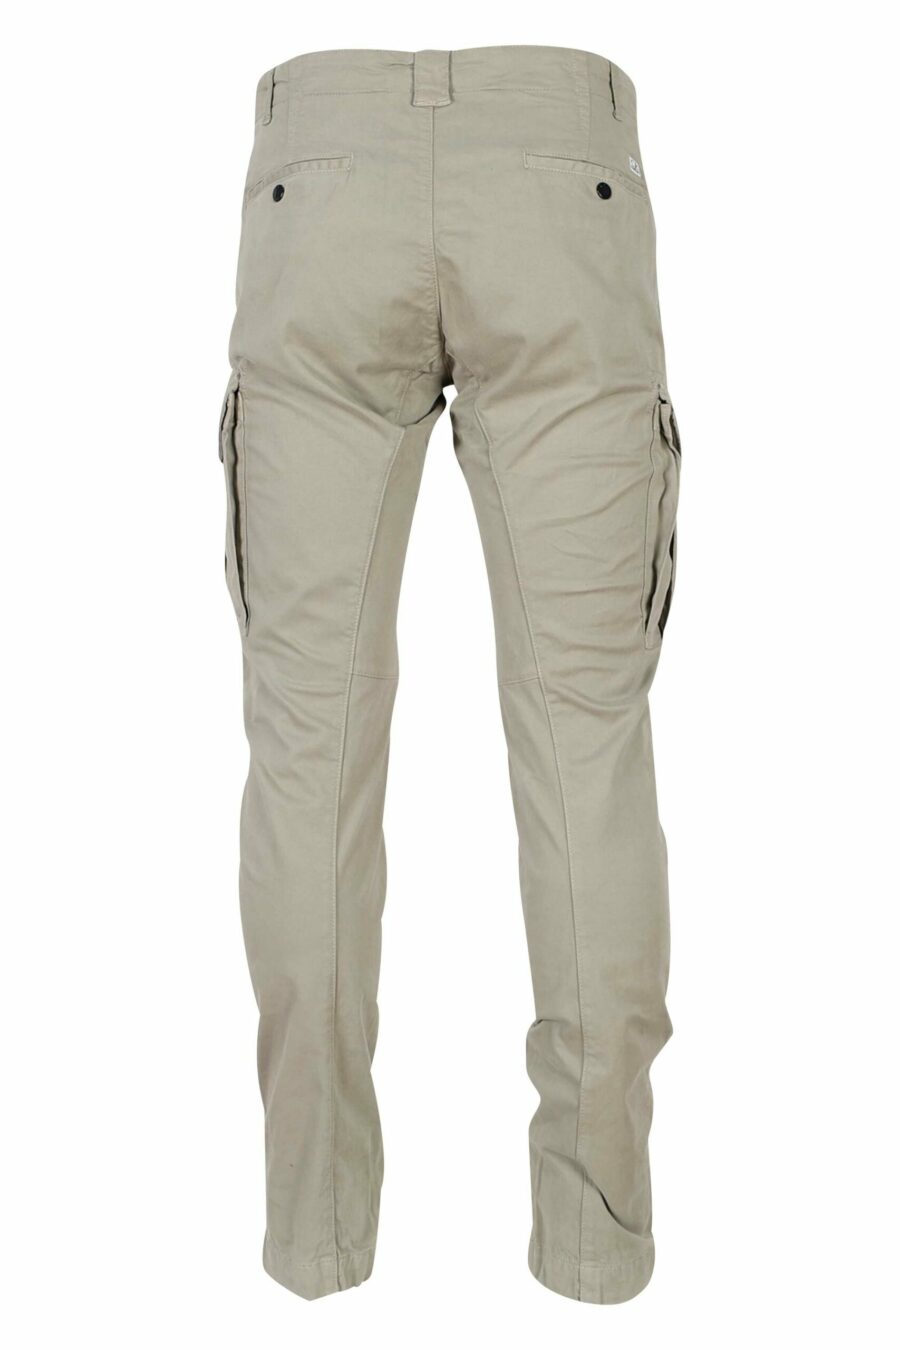 Pantalon cargo beige en satin stretch et logo lens - 7620943595307 2 1 scaled